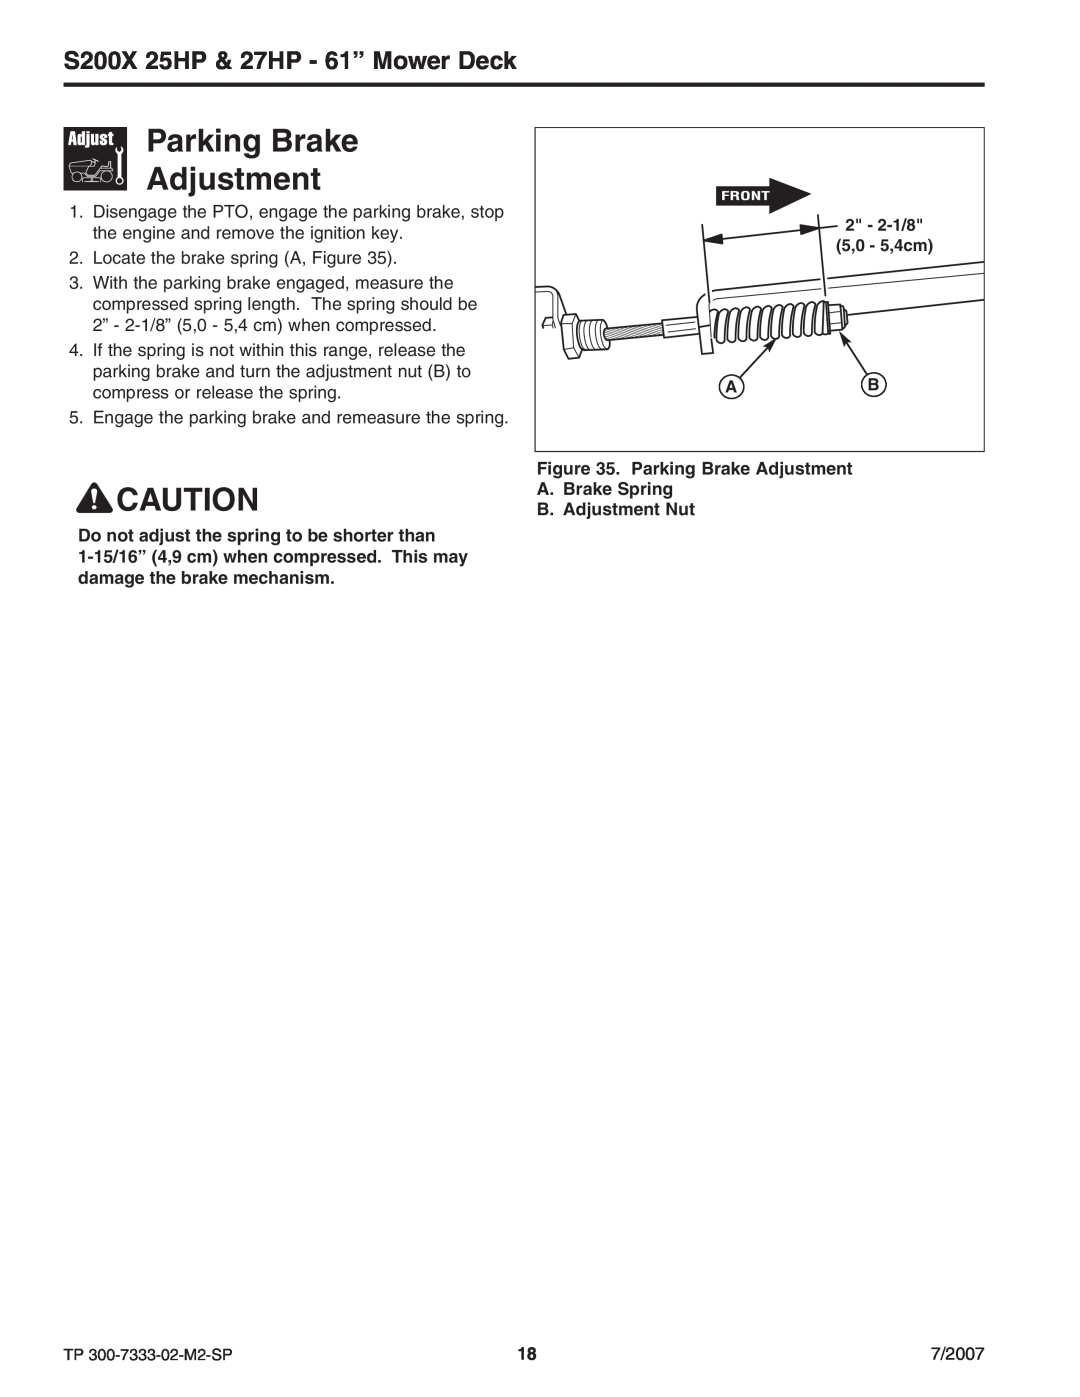 Briggs & Stratton 5900692, 5900664 manual Parking Brake Adjustment, S200X 25HP & 27HP - 61” Mower Deck, 5,0 - 5,4cm 